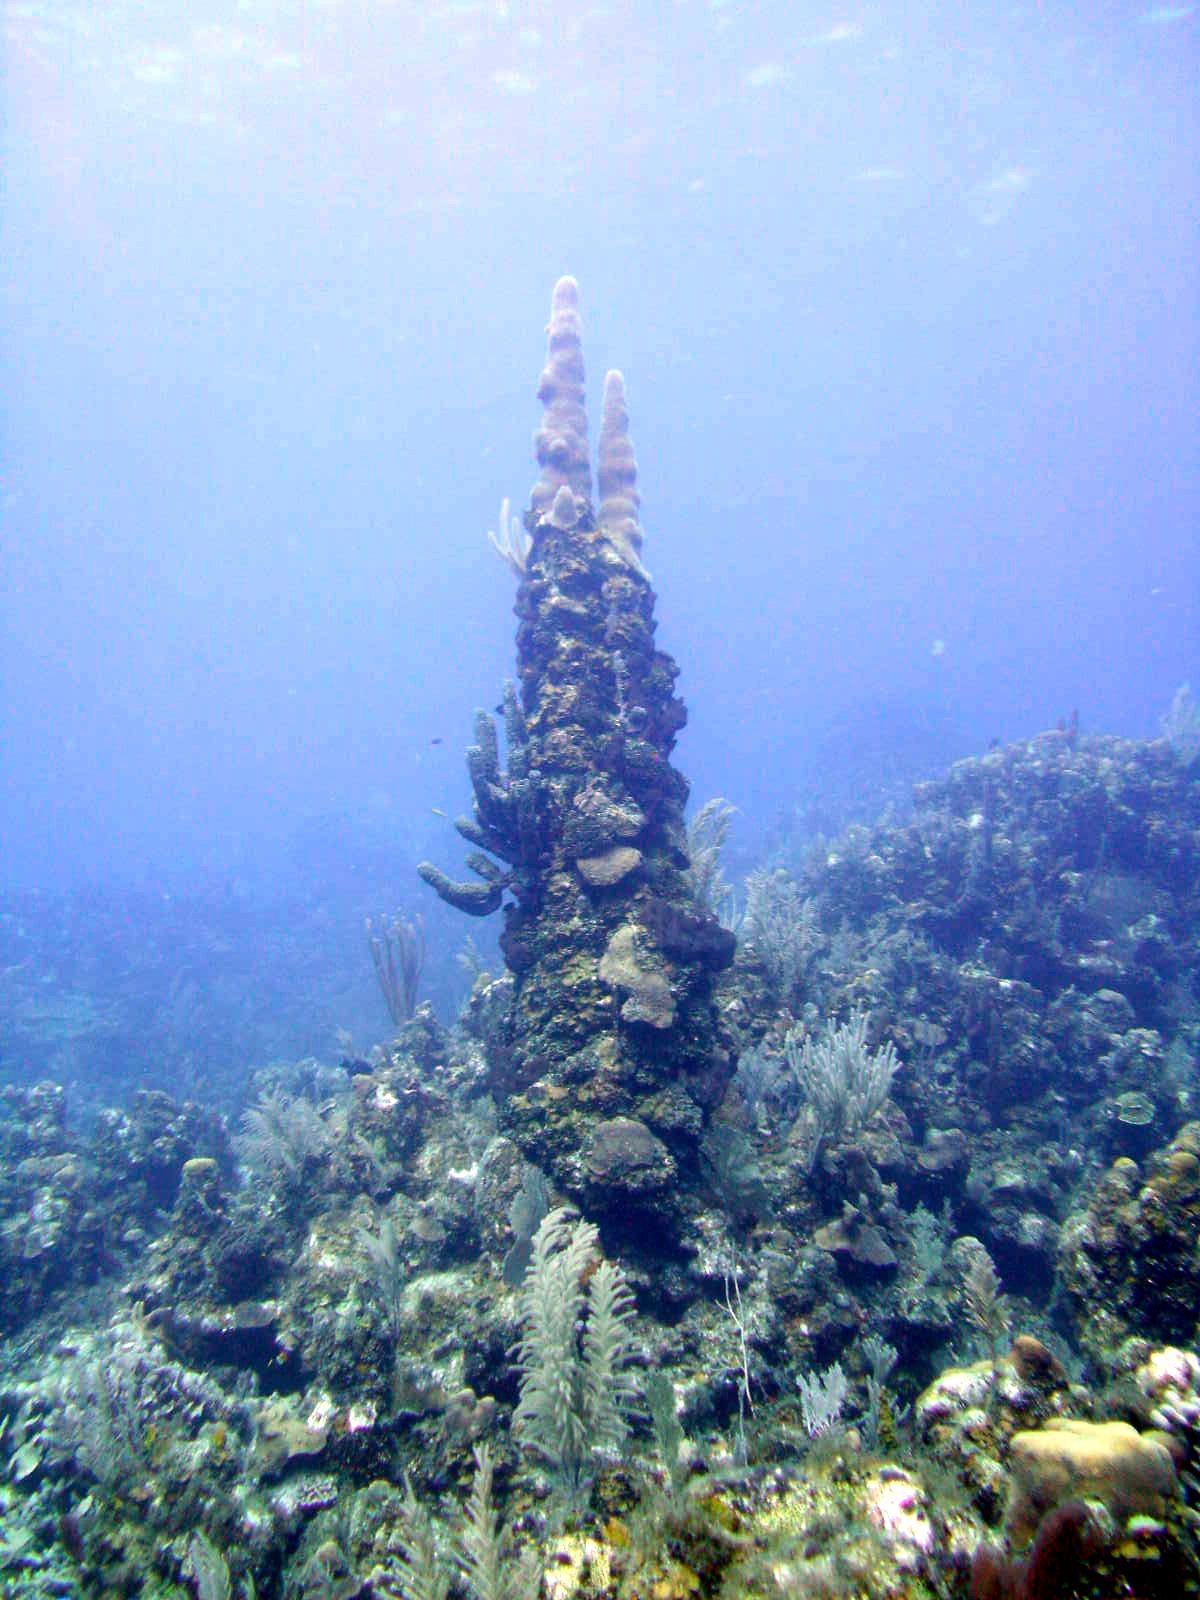 "Totem pole" coral